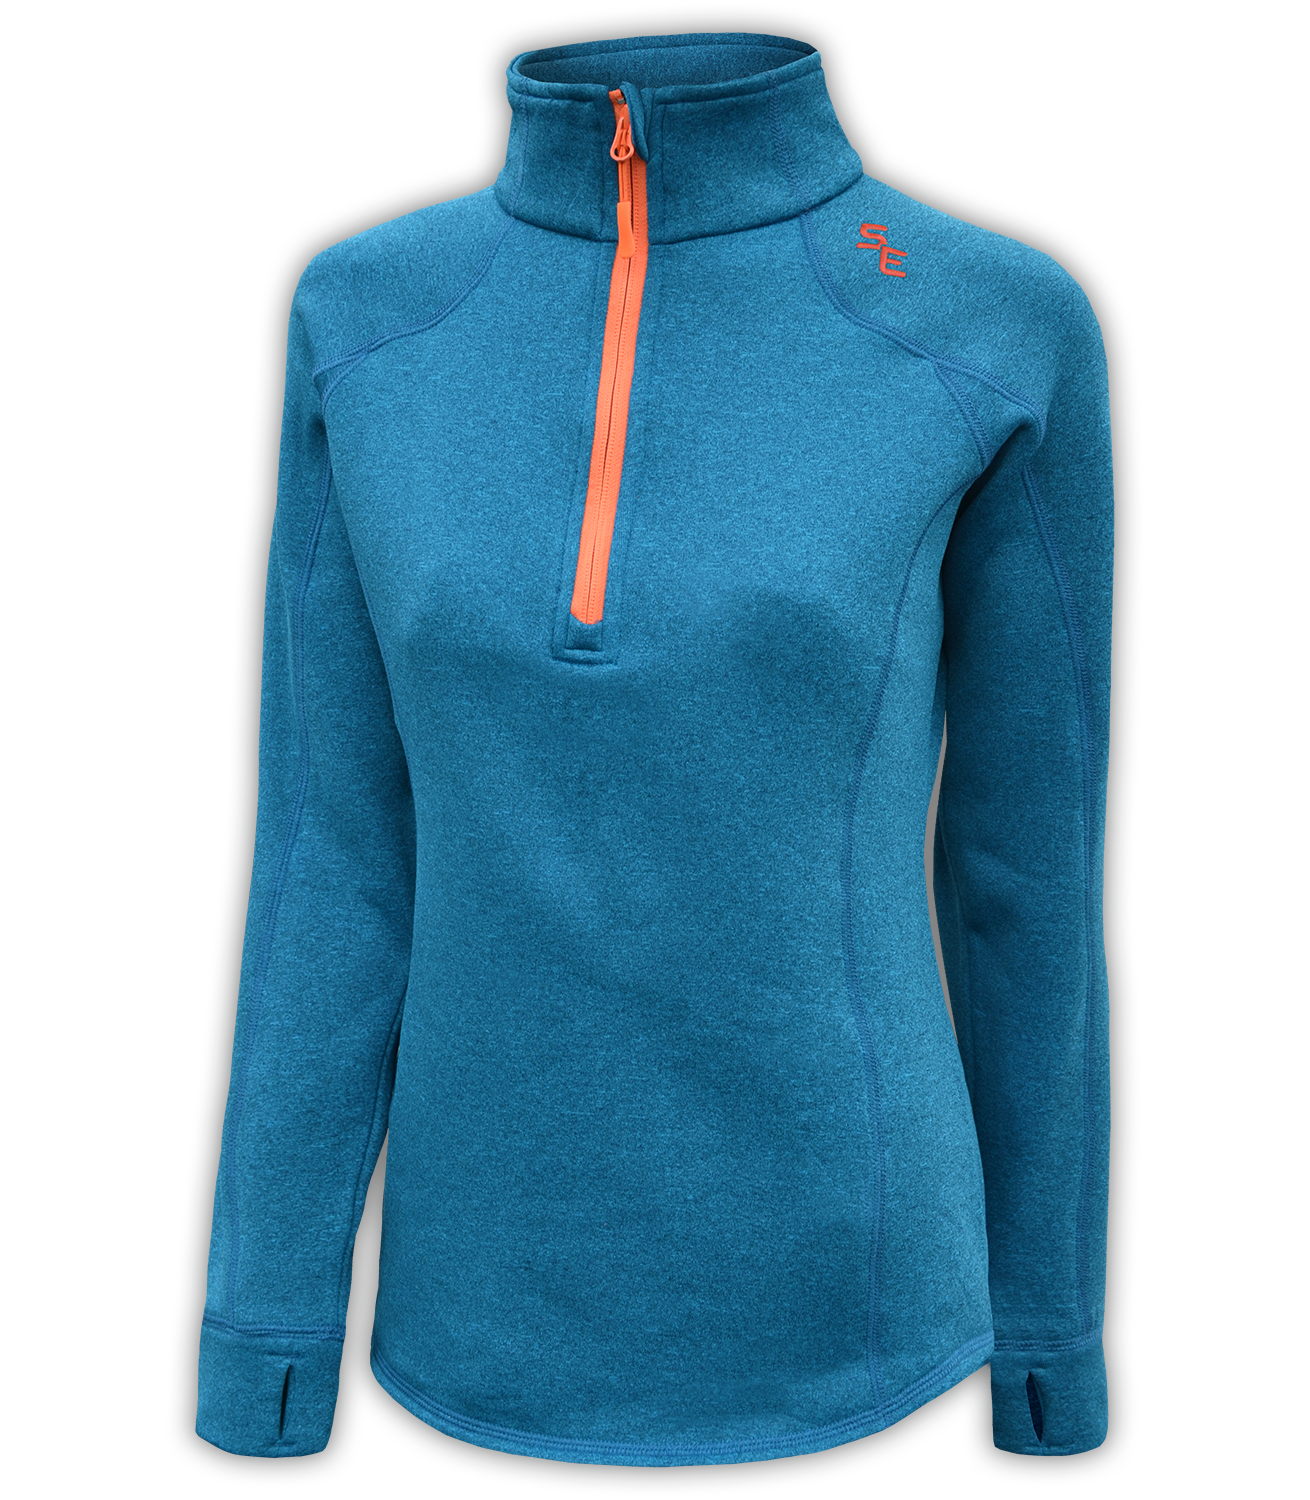 womens-stretchy-fleece-pullover-blue-orange-zipper-summit-edge-outerwear